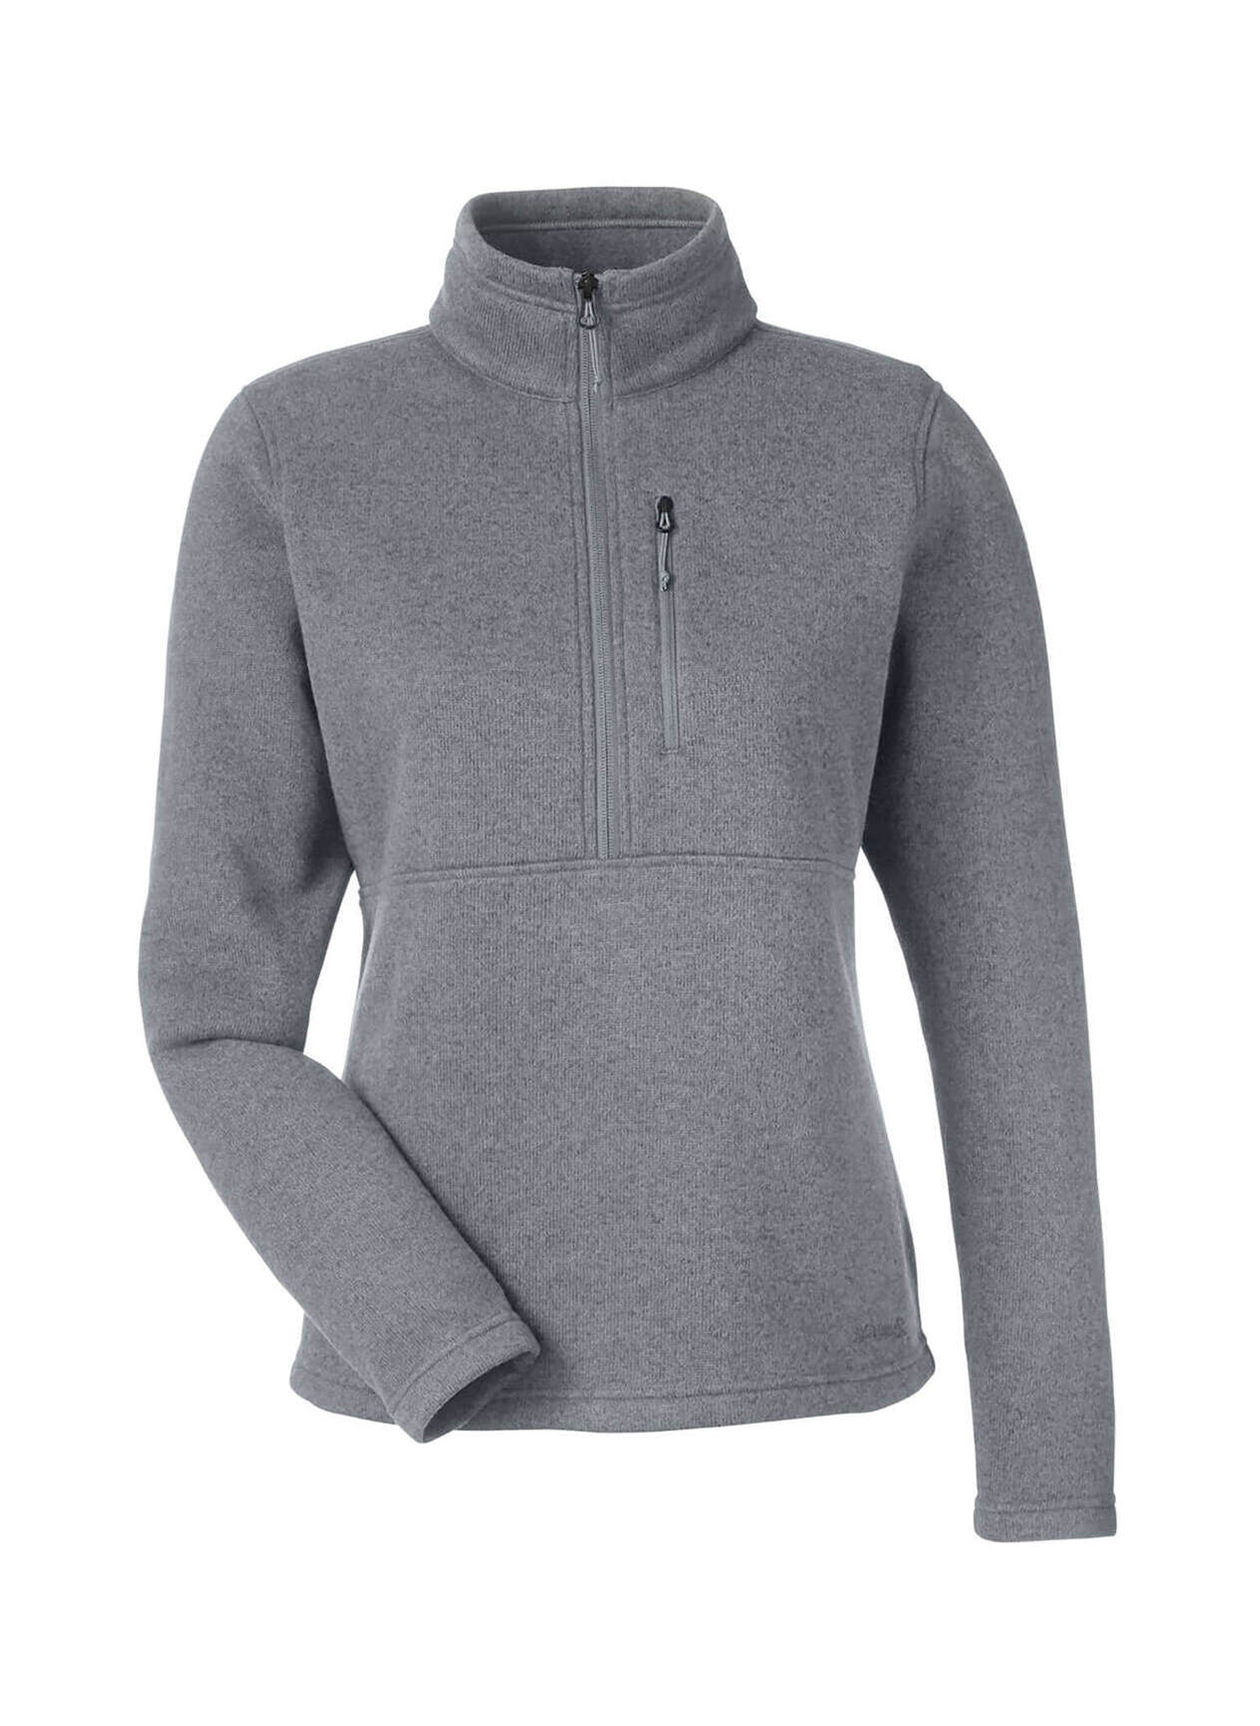 Marmot Women's Steel Onyx Dropline Half-Zip Sweater Fleece Jacket